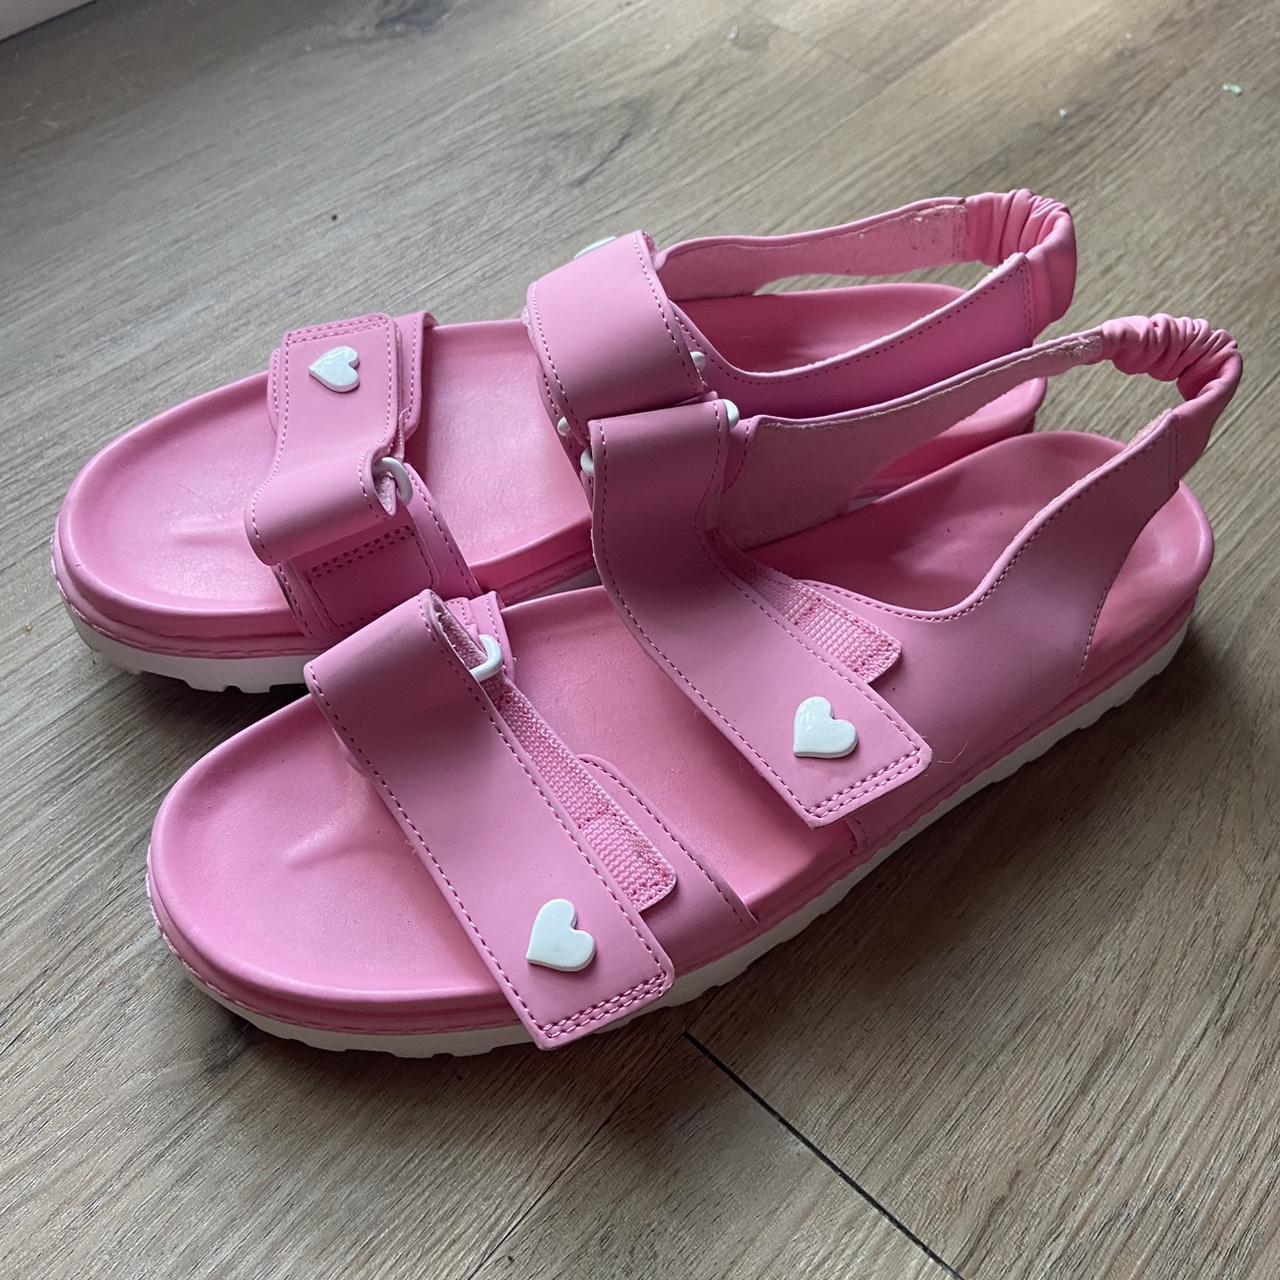 Stoney Clover Pink Heart Sandals Size 7 Worn Once... - Depop